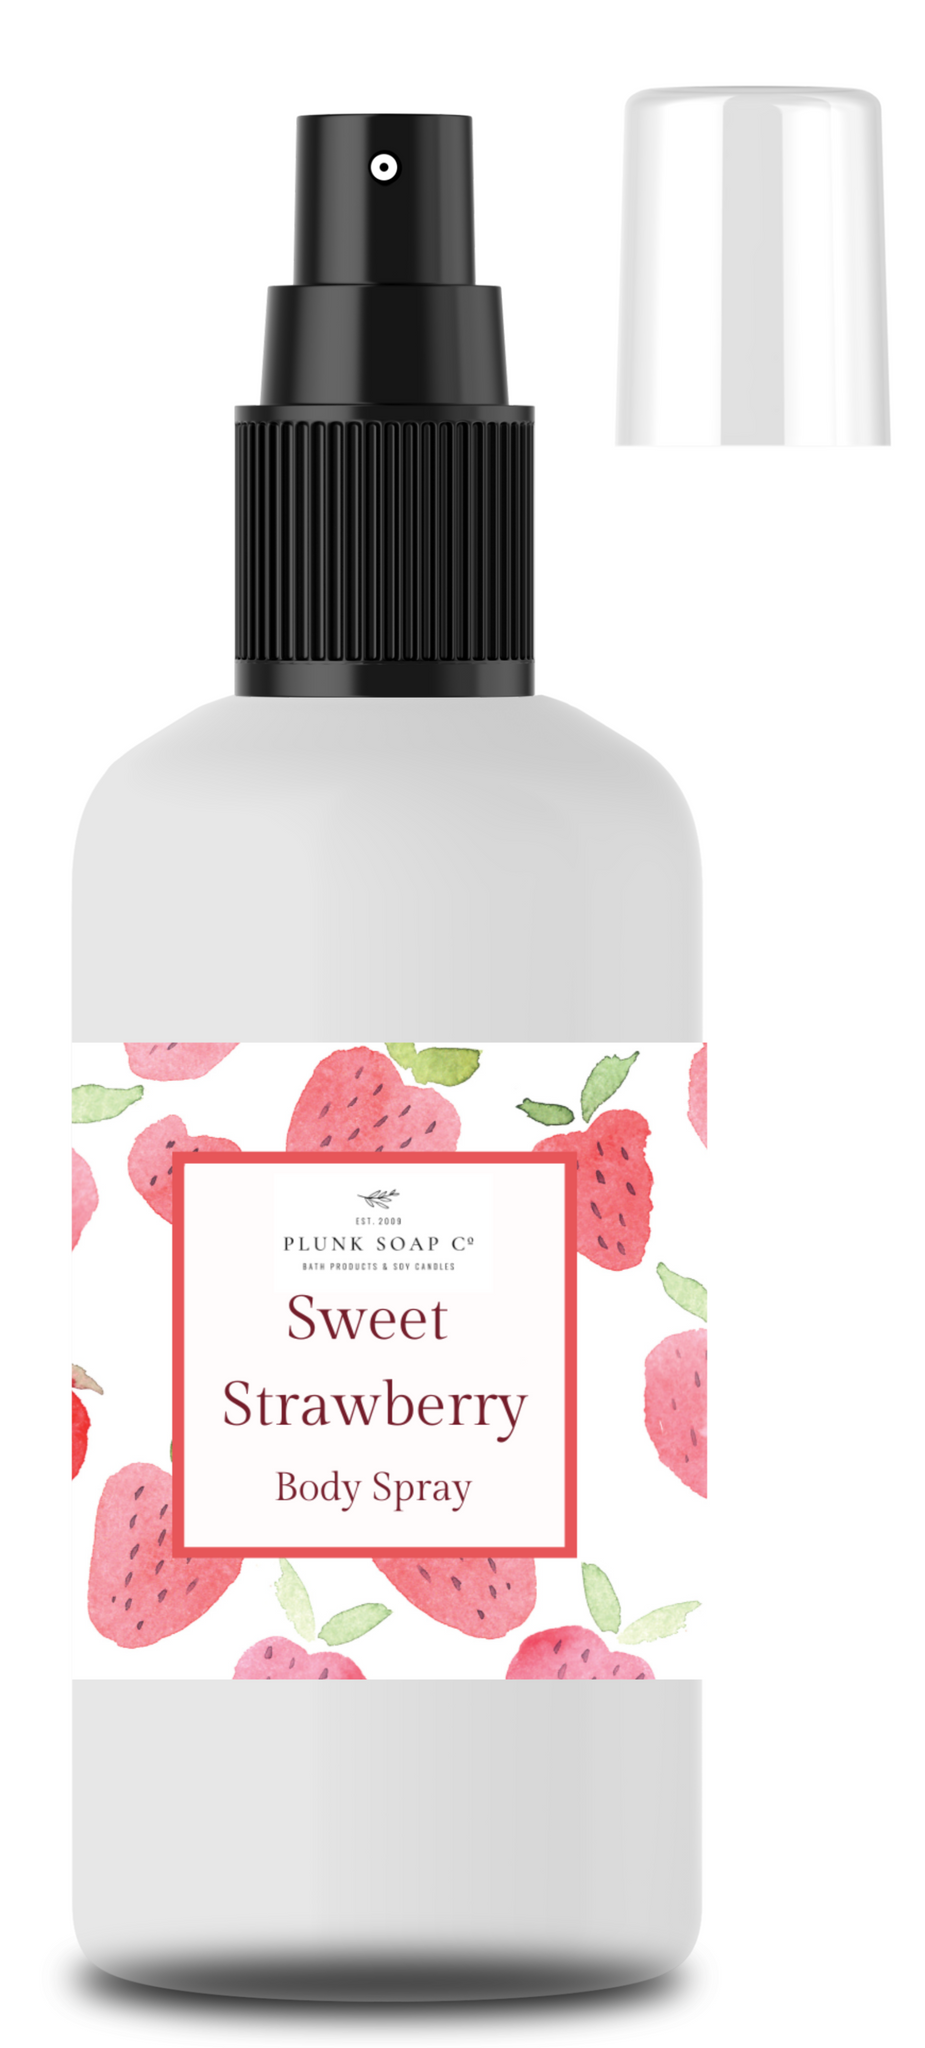 Strawberry scented body spray